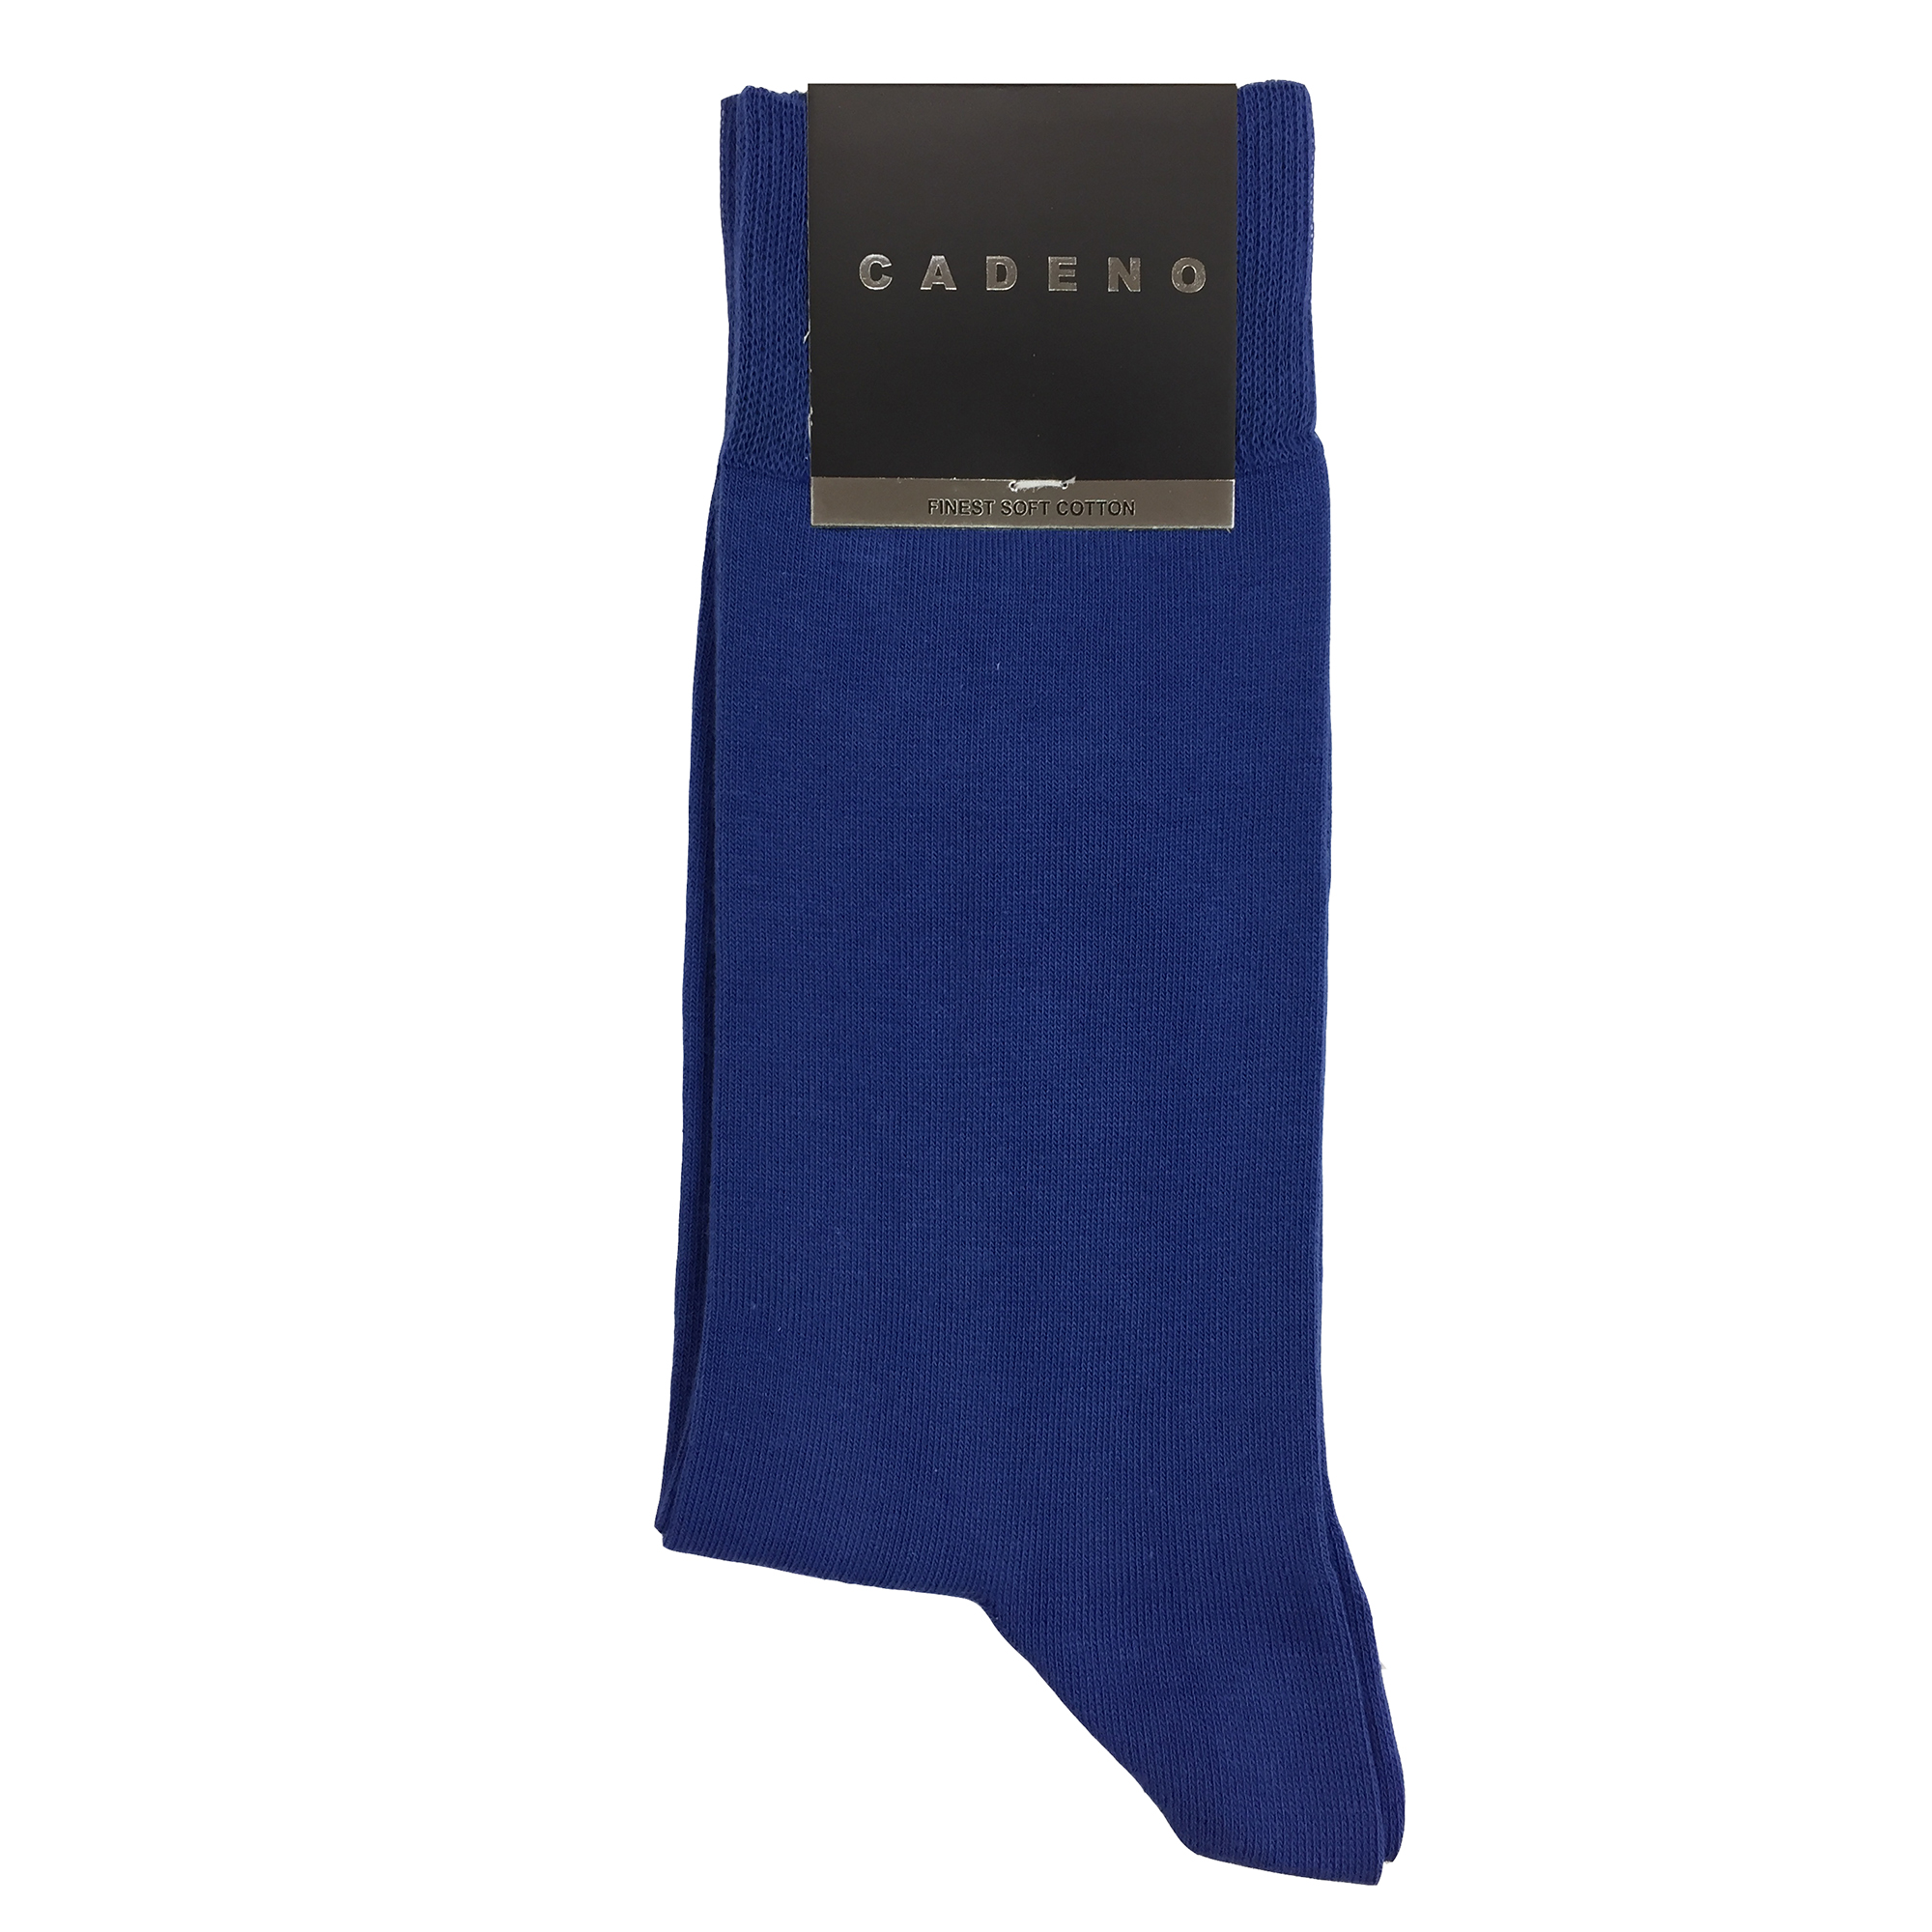 جوراب مردانه کادنو مدل CAF1001 رنگ آبی تیره